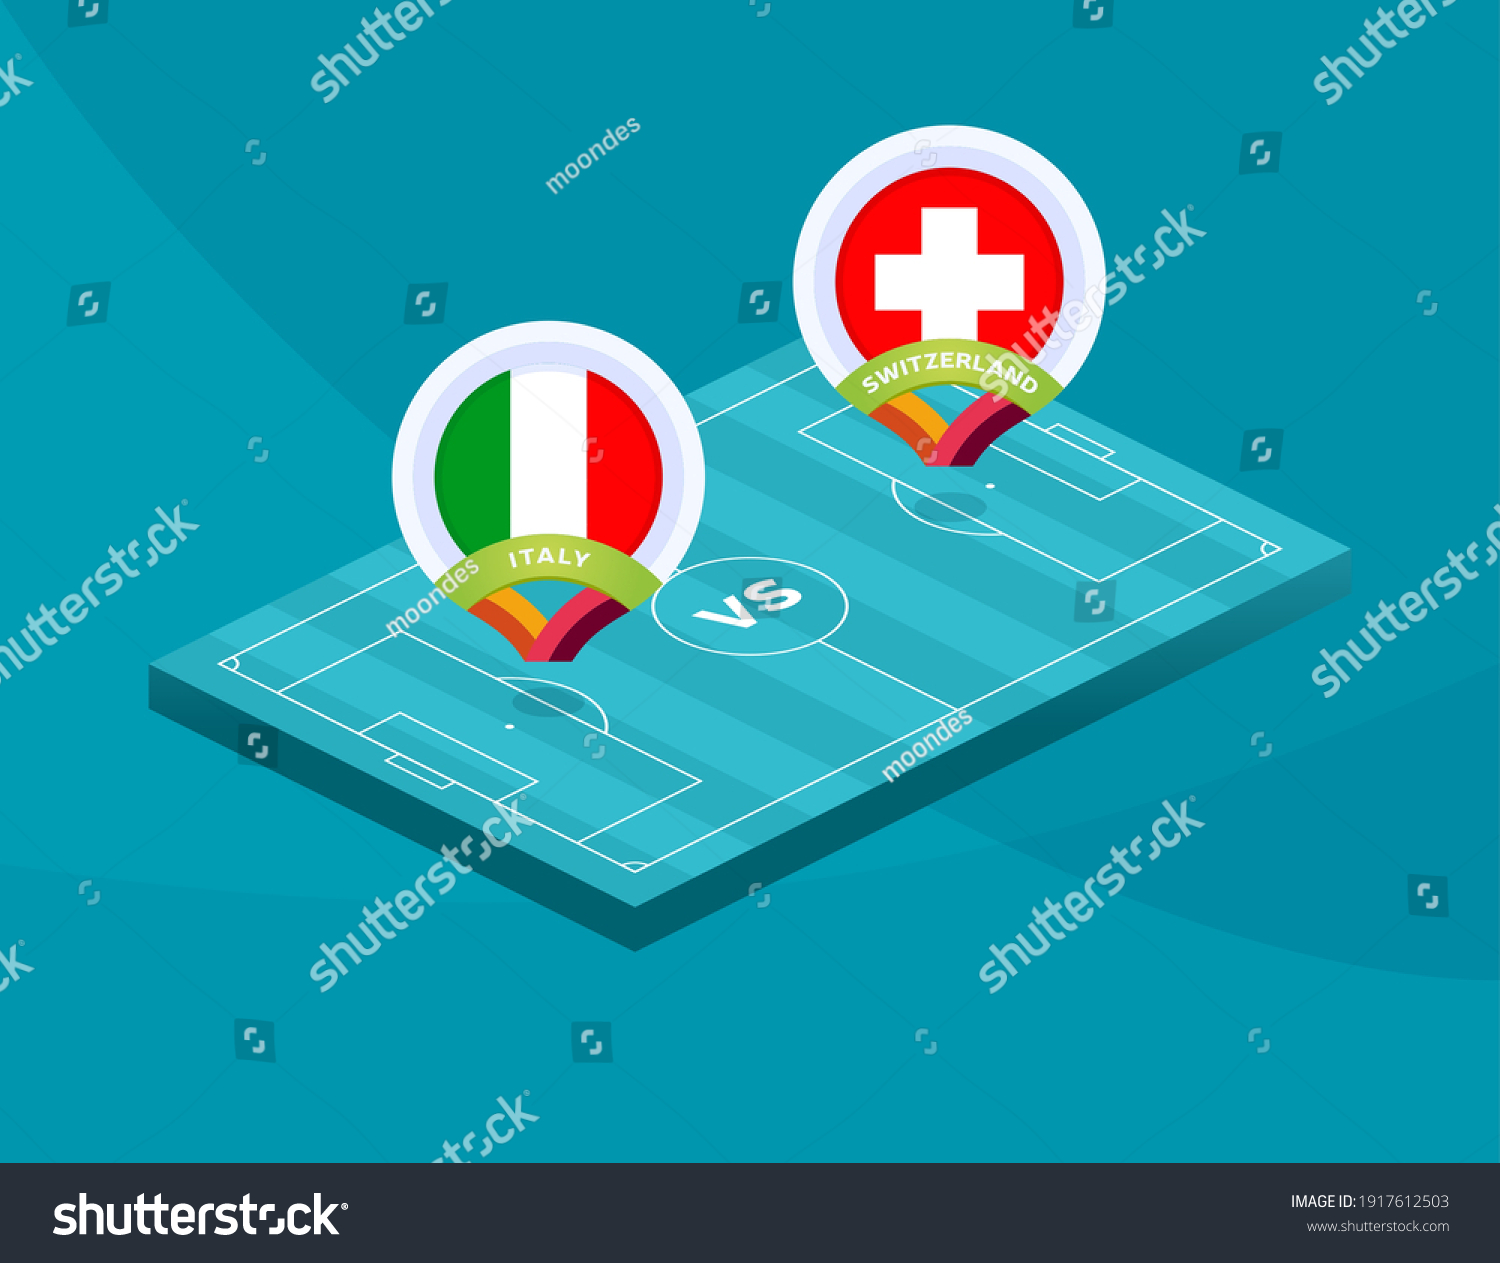 Stock Vector Italy Vs Switzerland Euro Match Football Championship Match Versus Teams Intro Sport 1917612503 